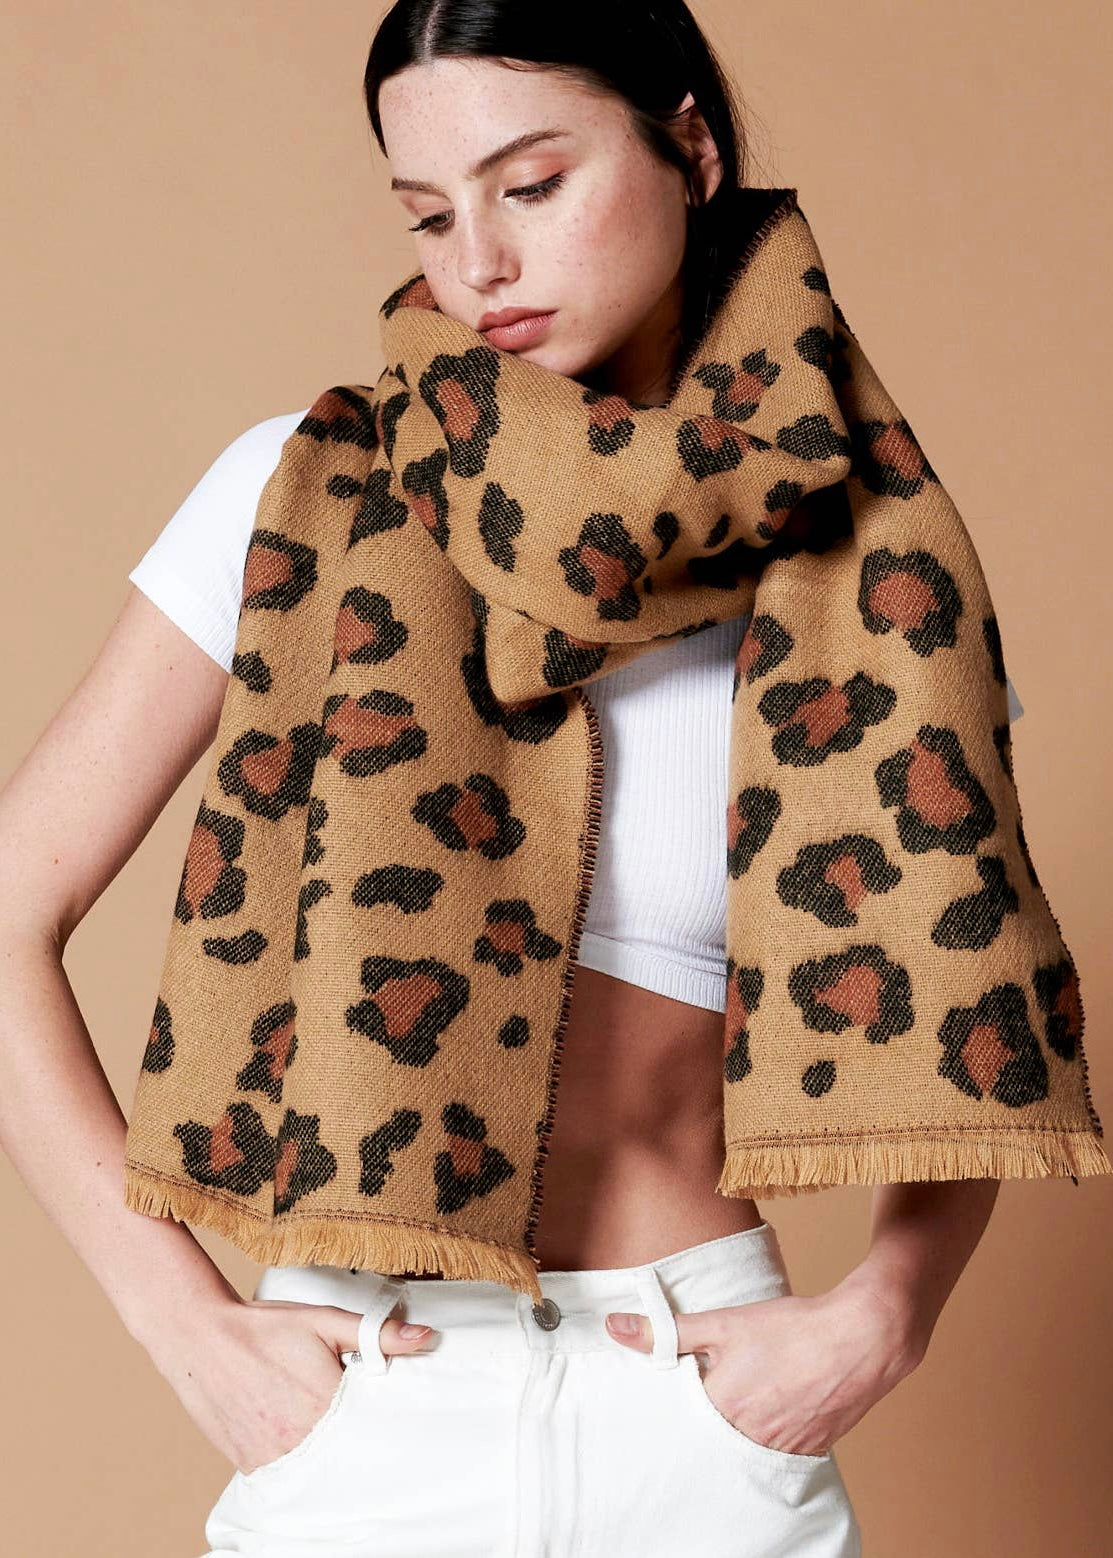 winter scarf, lepoard scarf, eris knitted scarf, angels whisper, acrylic scarf, leopard print